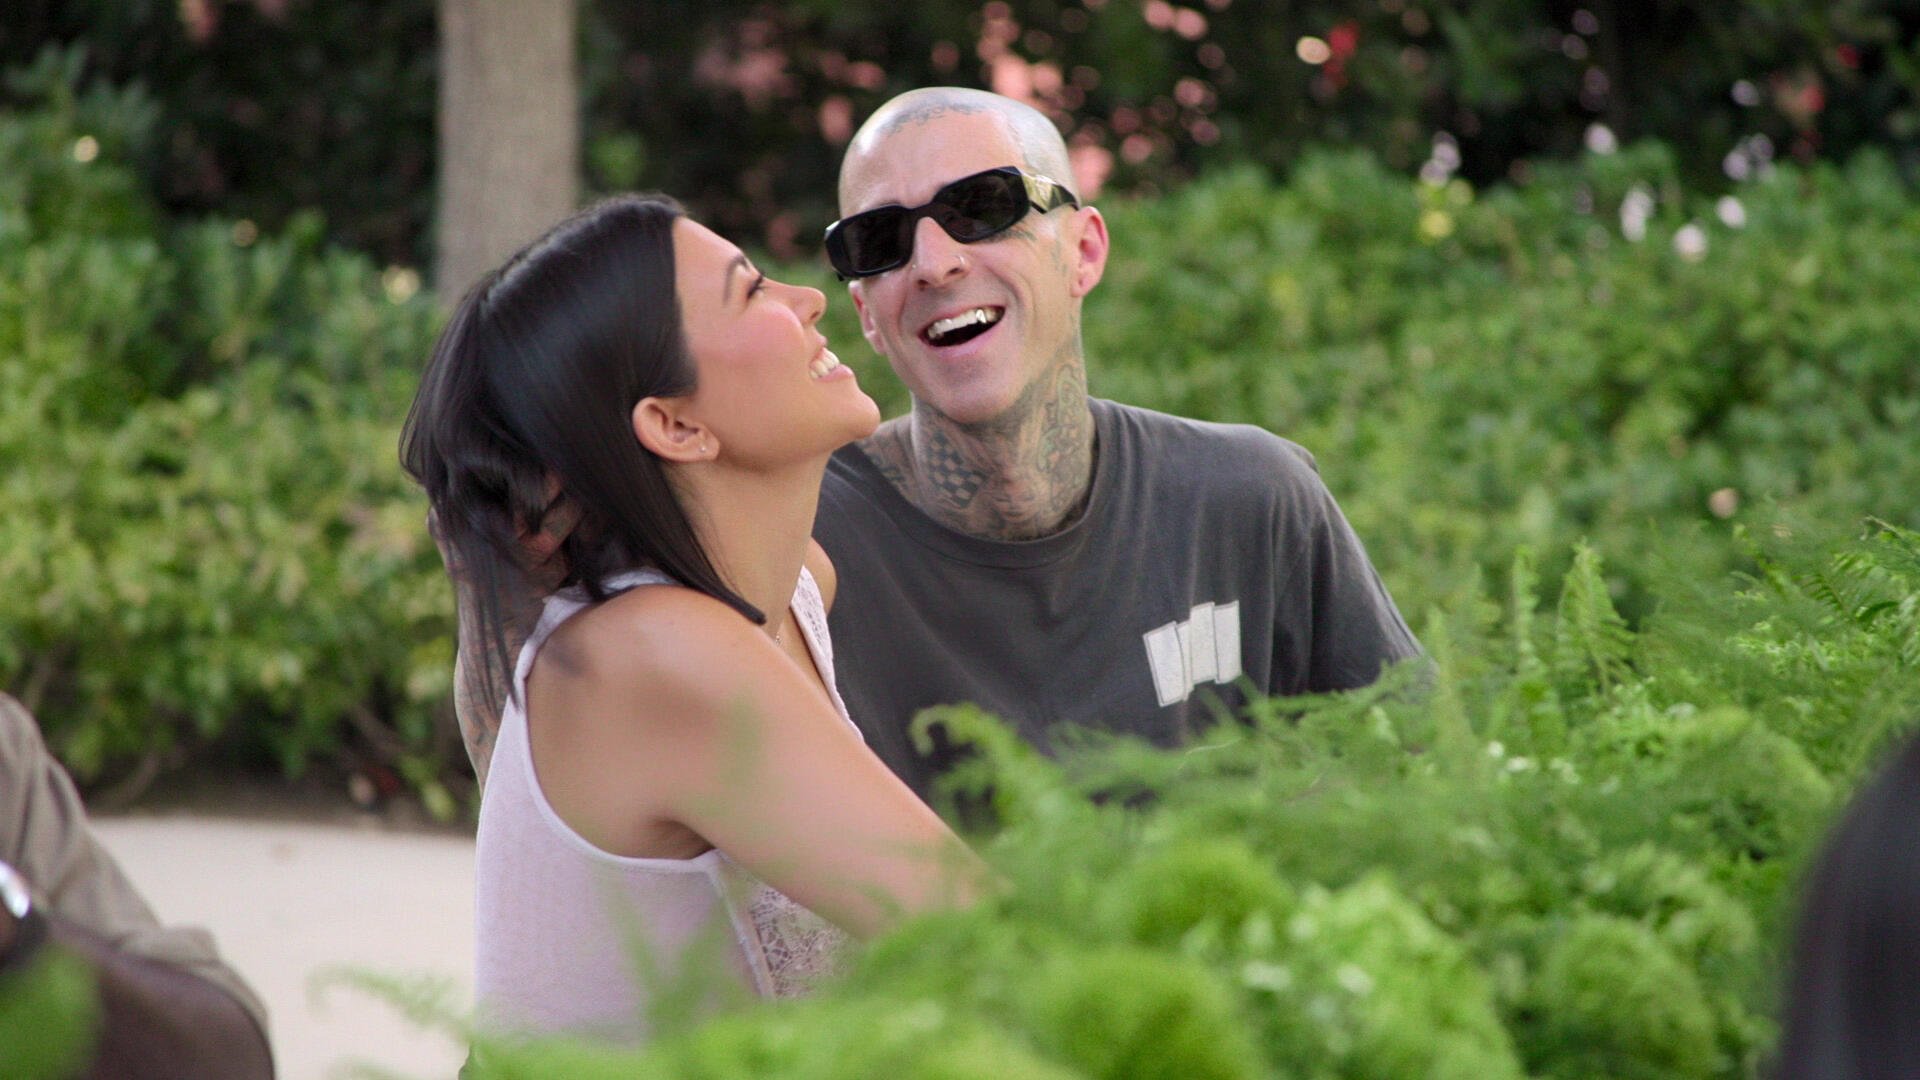 Kourtney Kardashian and Travis Barker smiling together in an episode of 'The Kardashians'